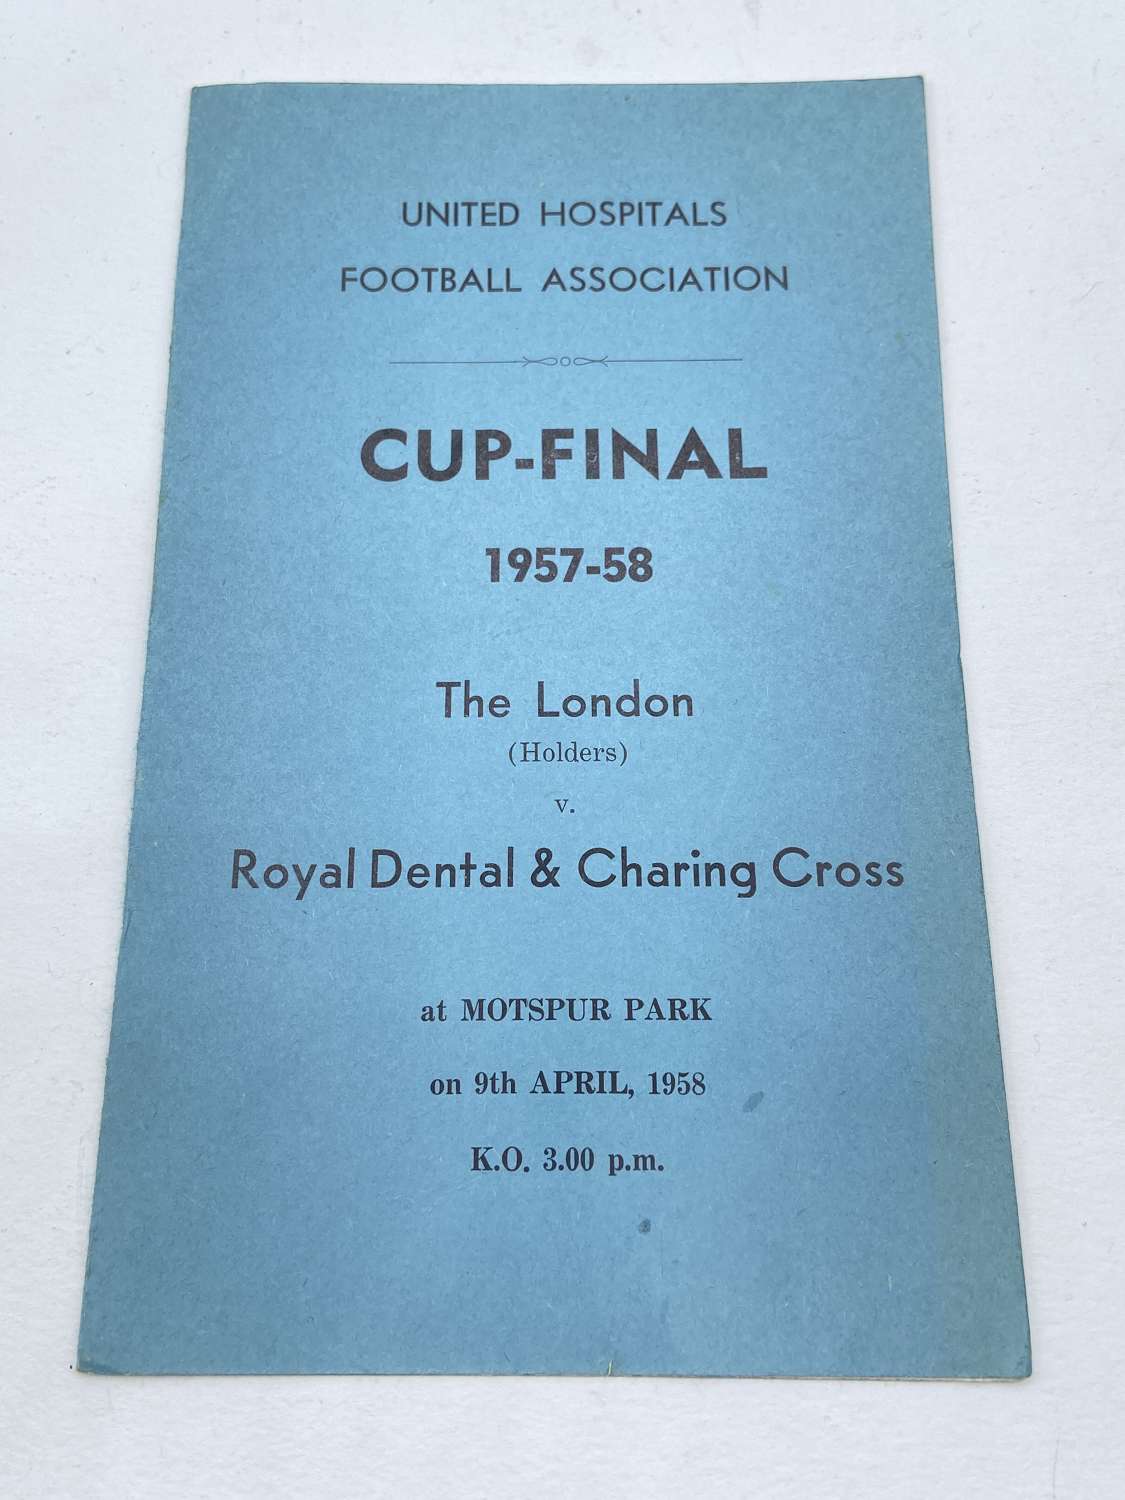 UNITED HOSPITALS FOOTBALL ASSOCIATION CUP-FINAL 1957-58 Programme